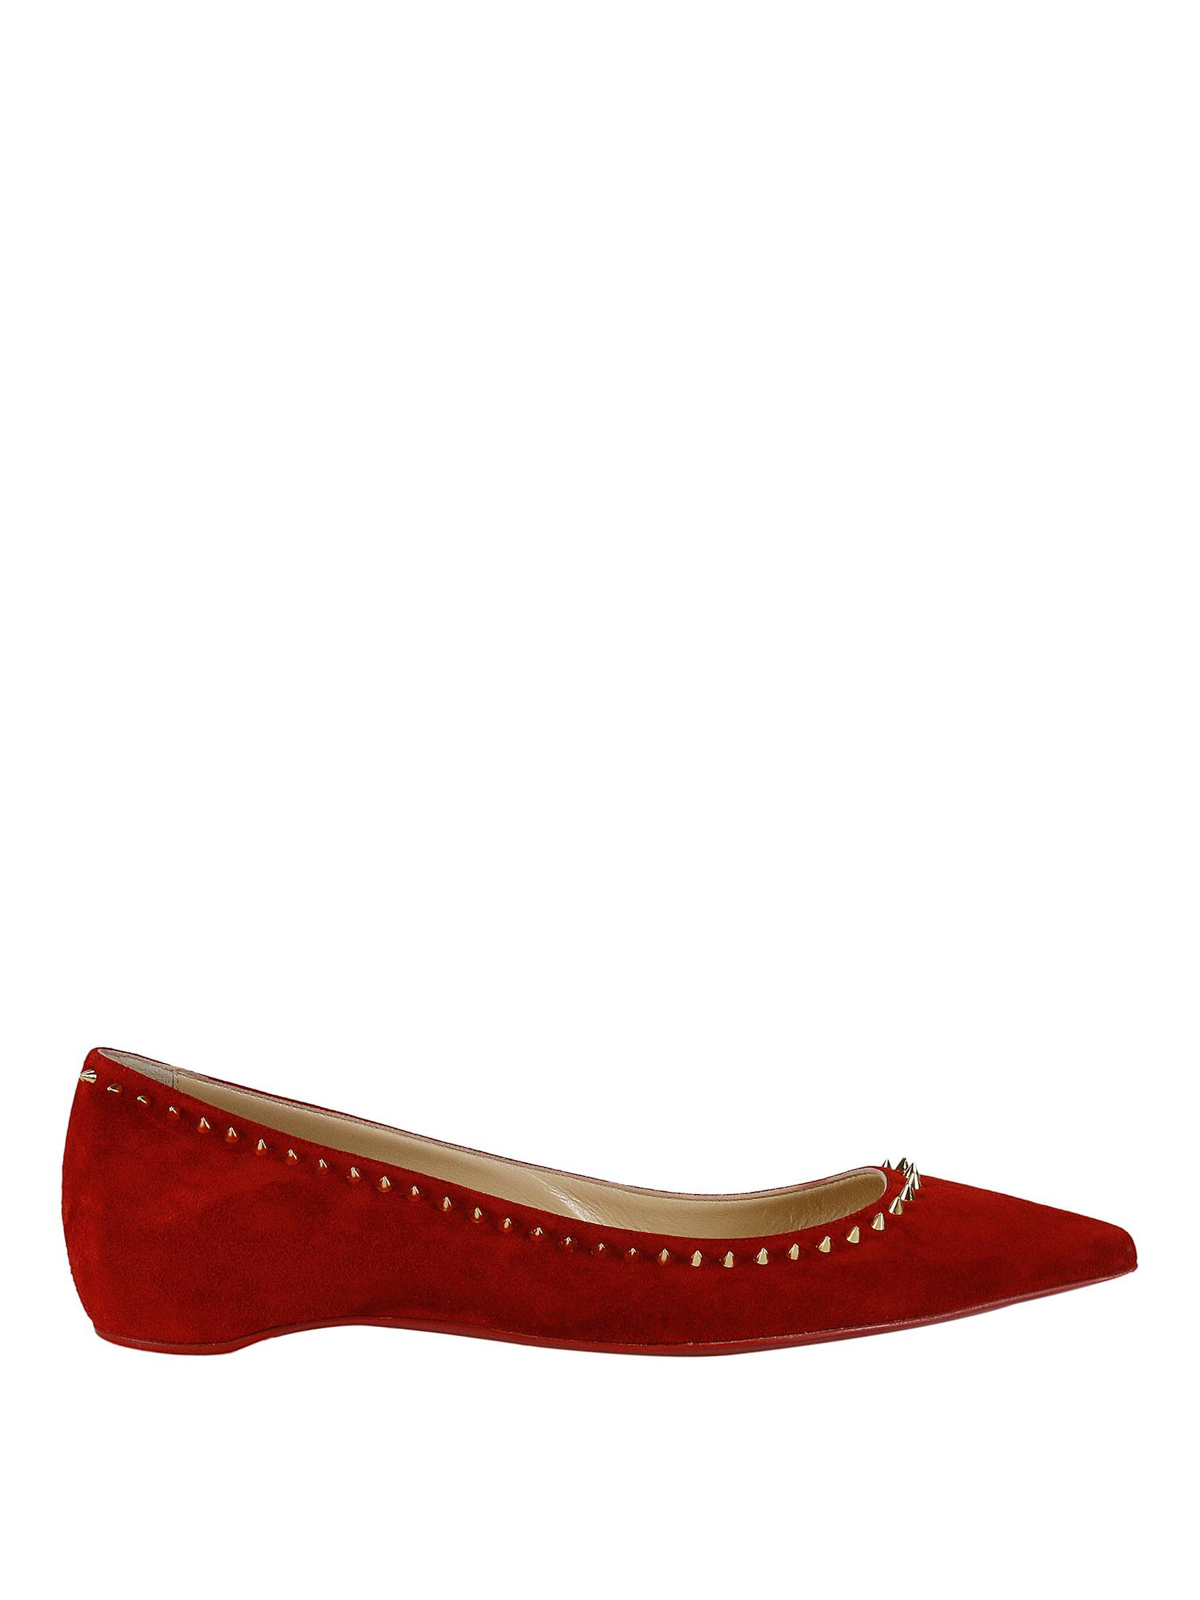 Flat shoes Christian Louboutin - Anjalina spike trim red suede flats ...